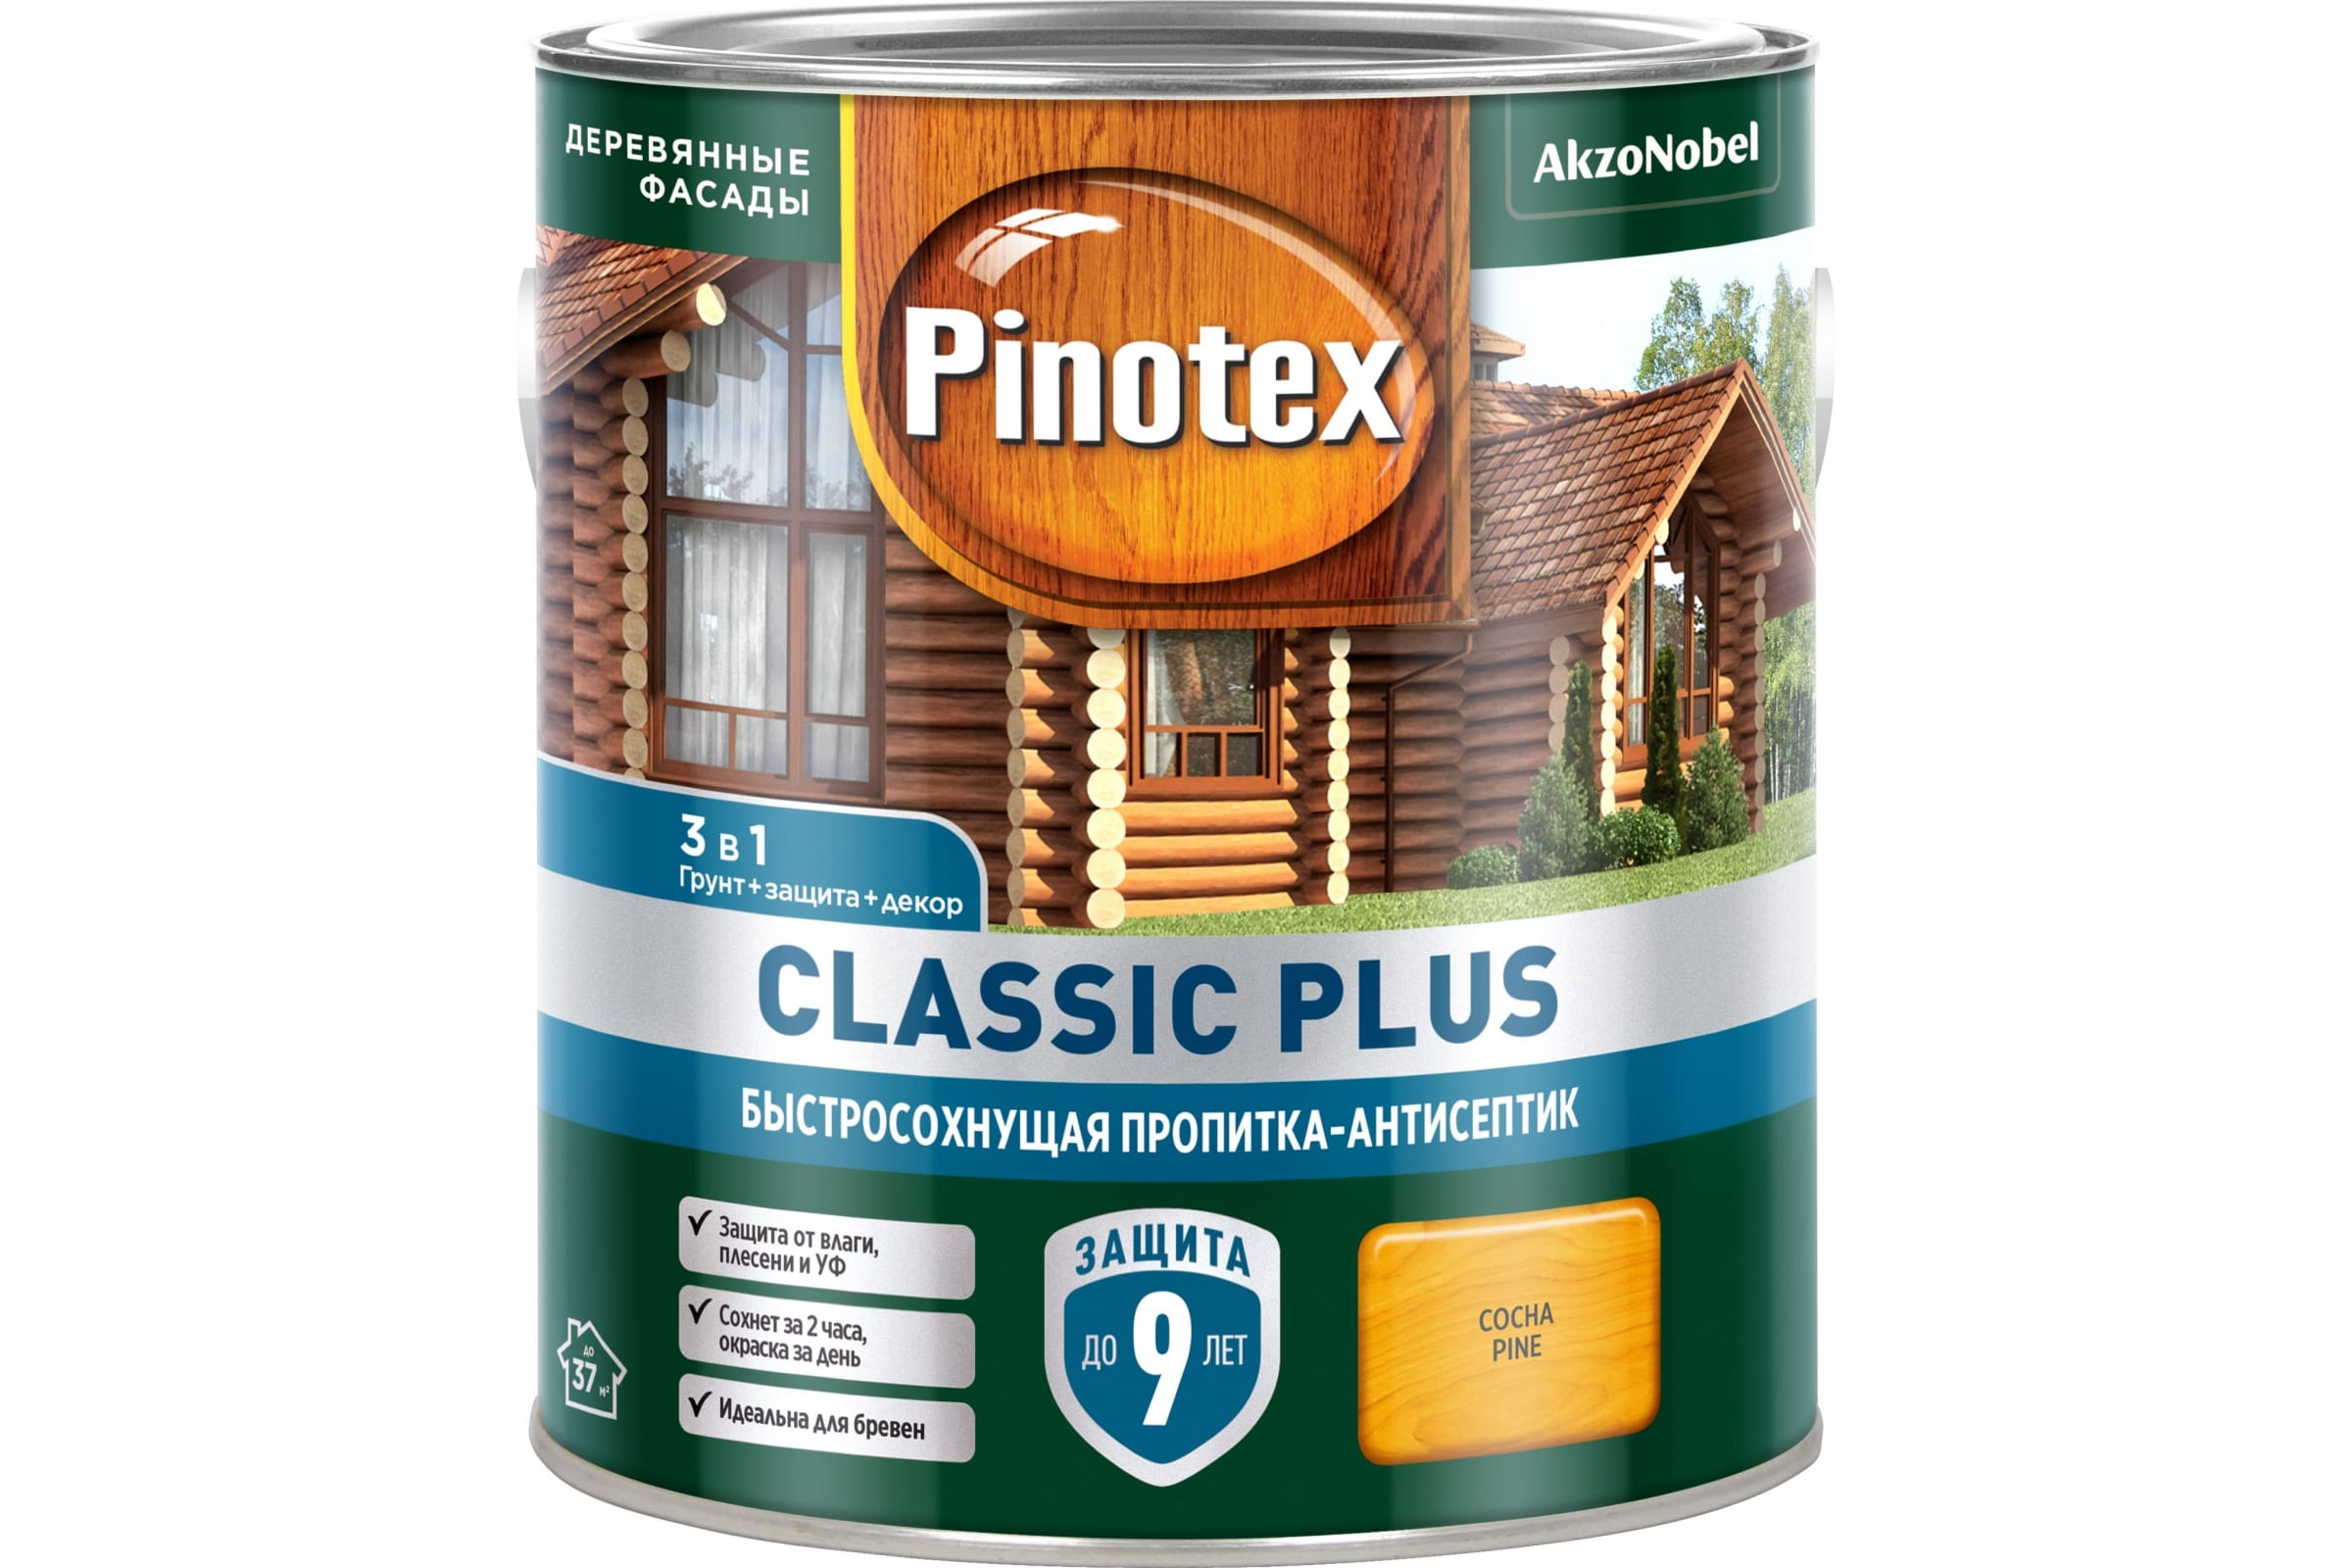 фото Pinotex classic plus пропитка-антисептик быстросохнущая 3 в 1, сосна 2,5 л 5479952